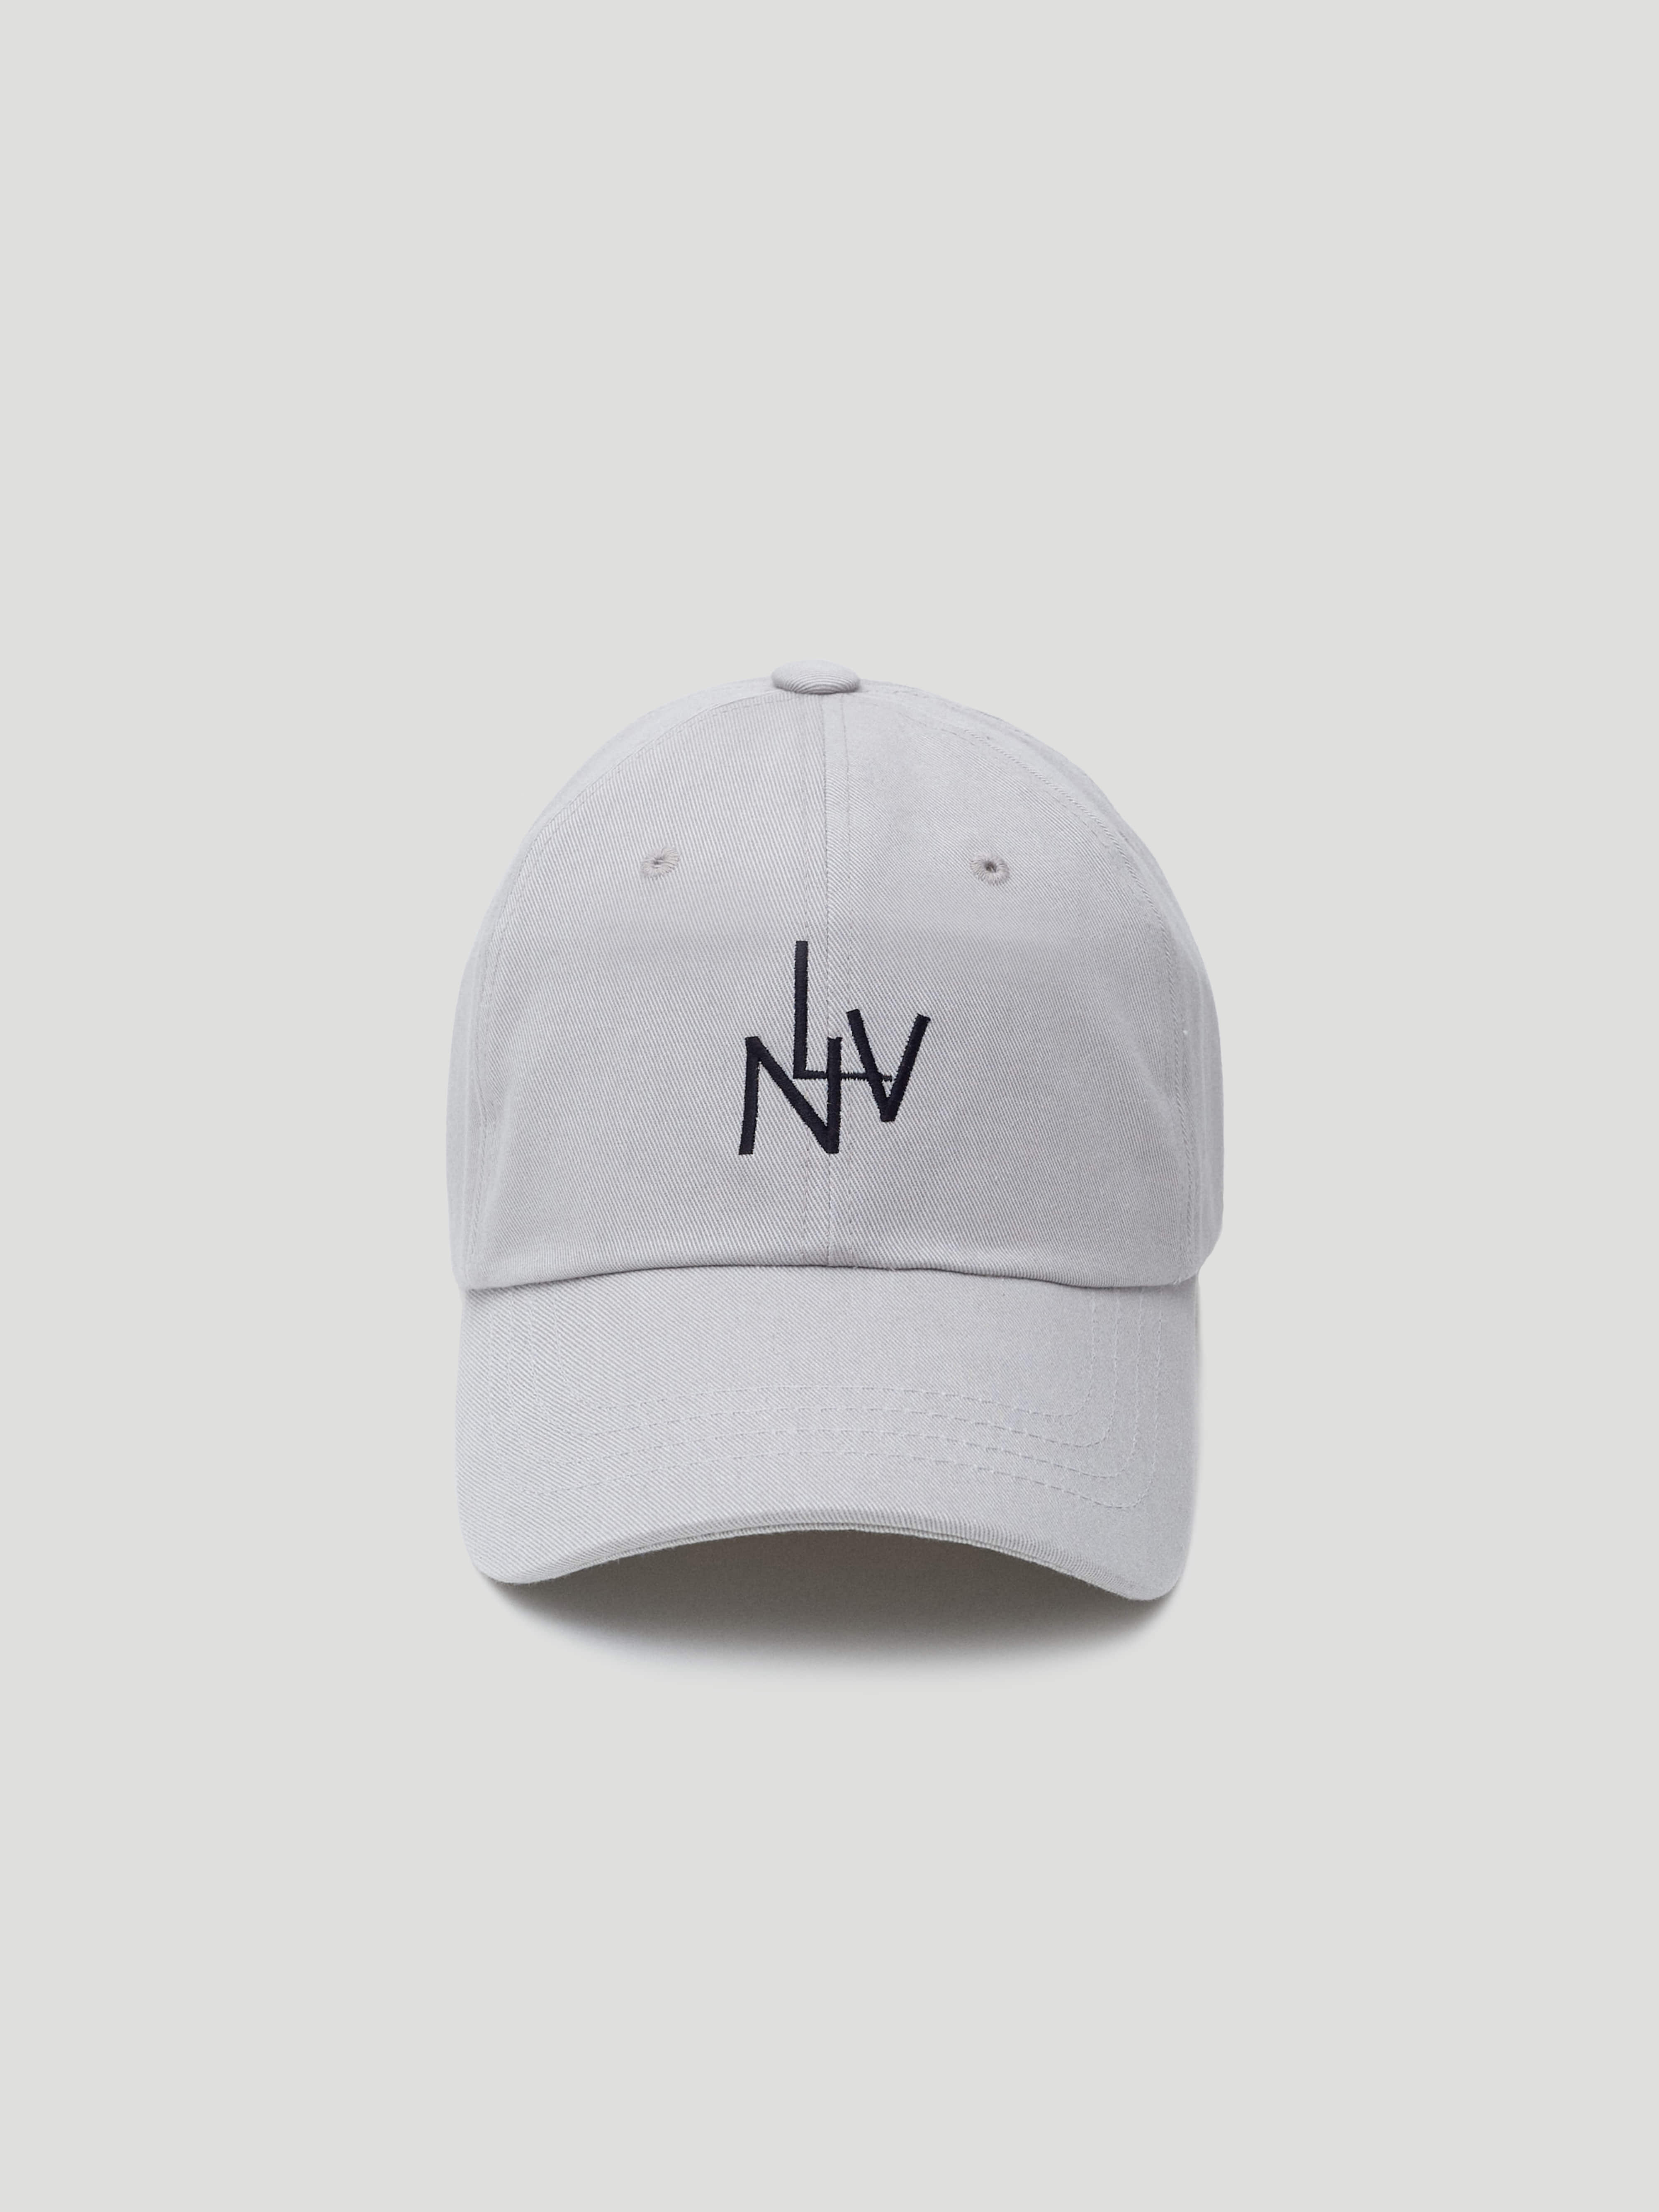 LNV Grey Ball cap (그레이)